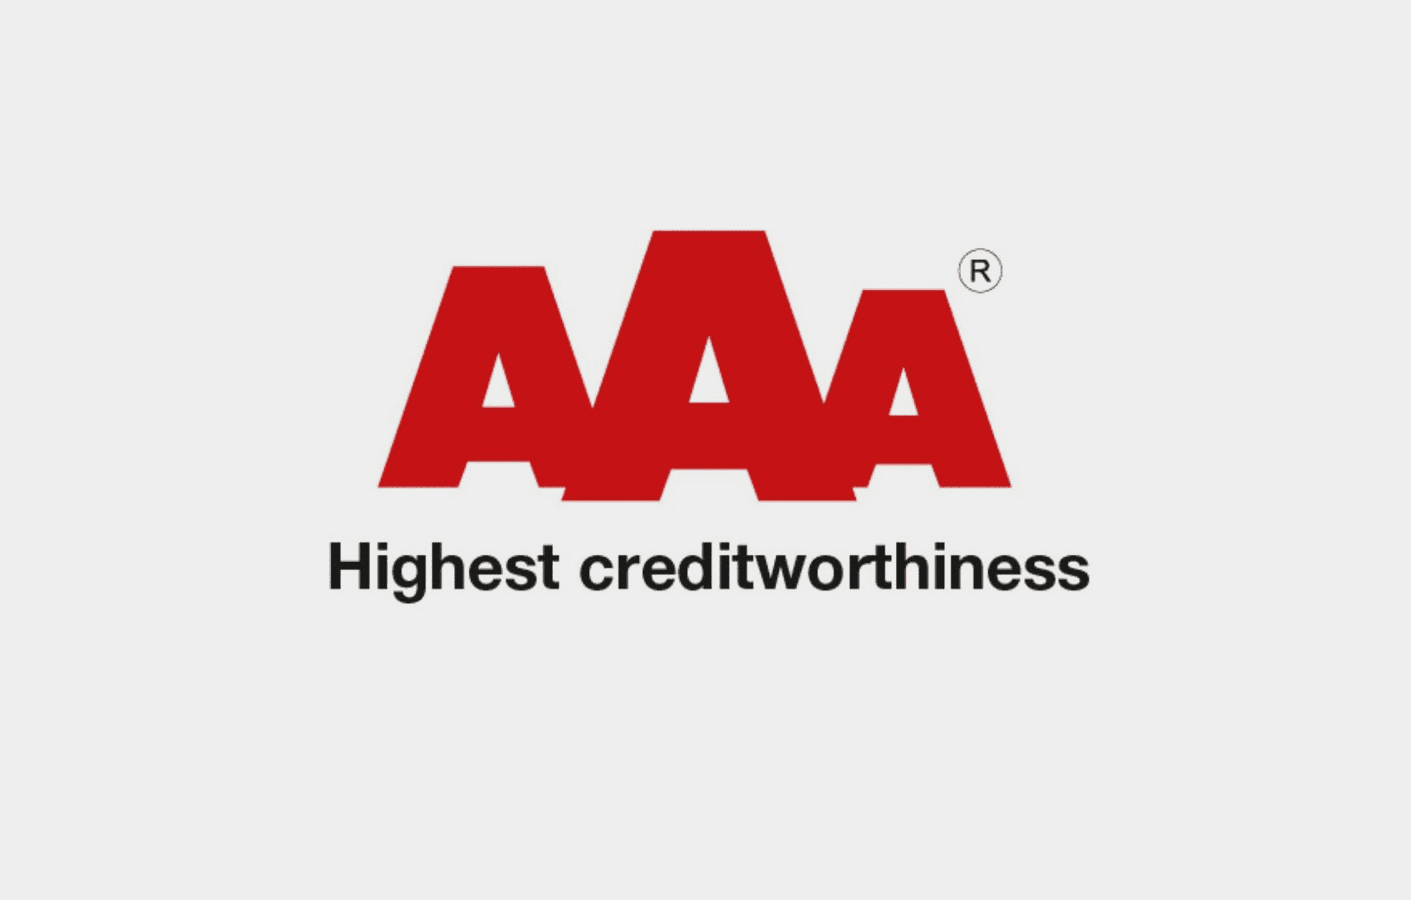 Achieve AAA Highest Creditworthiness again. · CUC